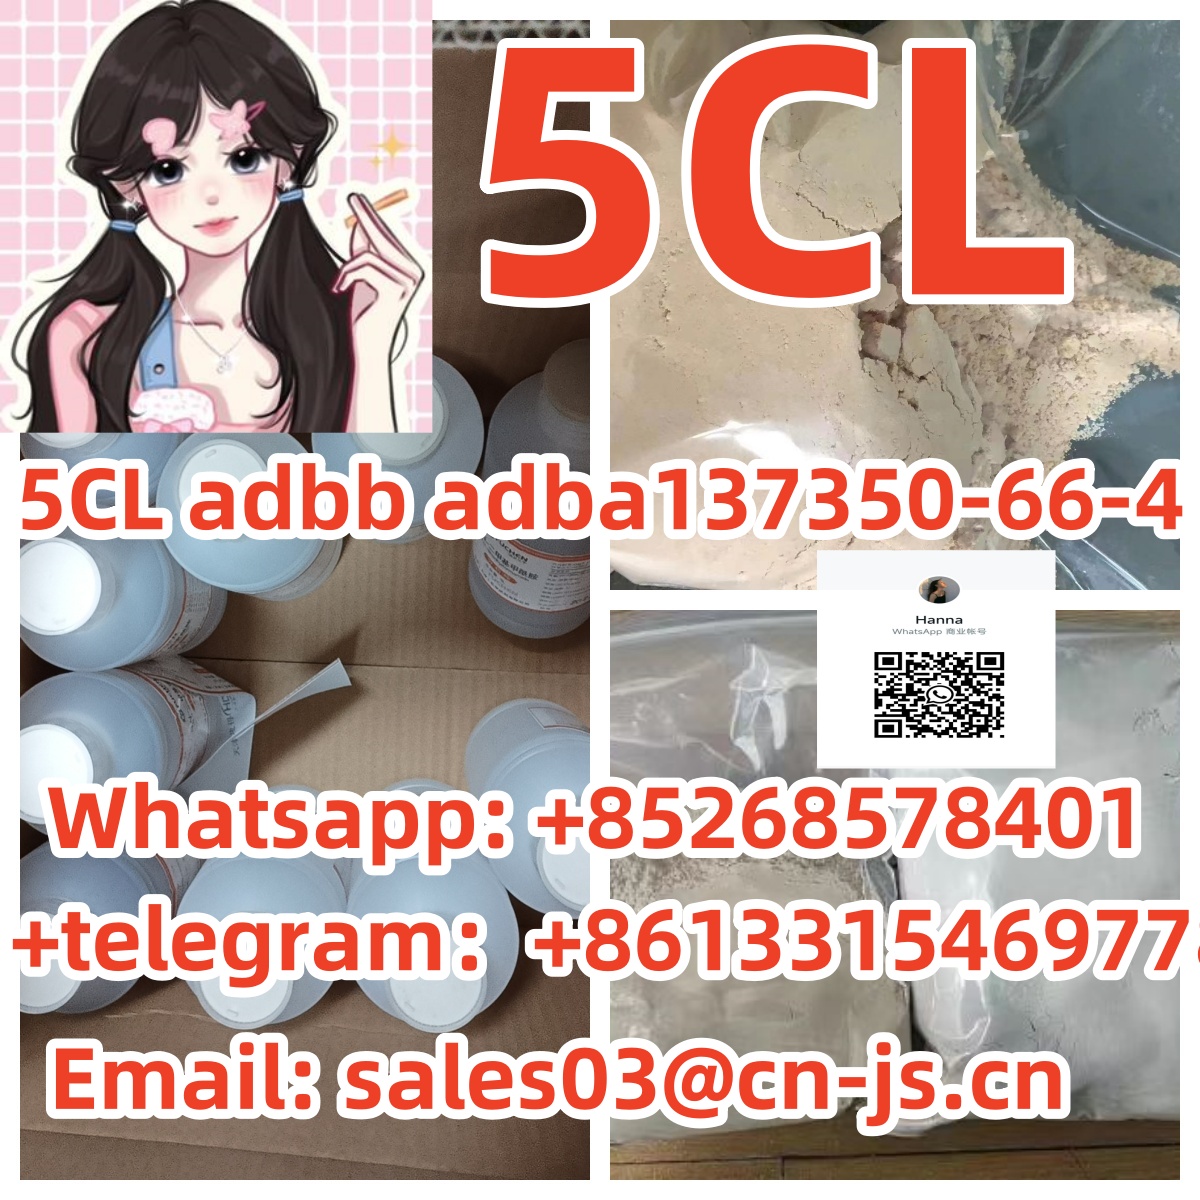 Hot Selling 5CL adbb adba137350-66-4,1,Pets,Dogs